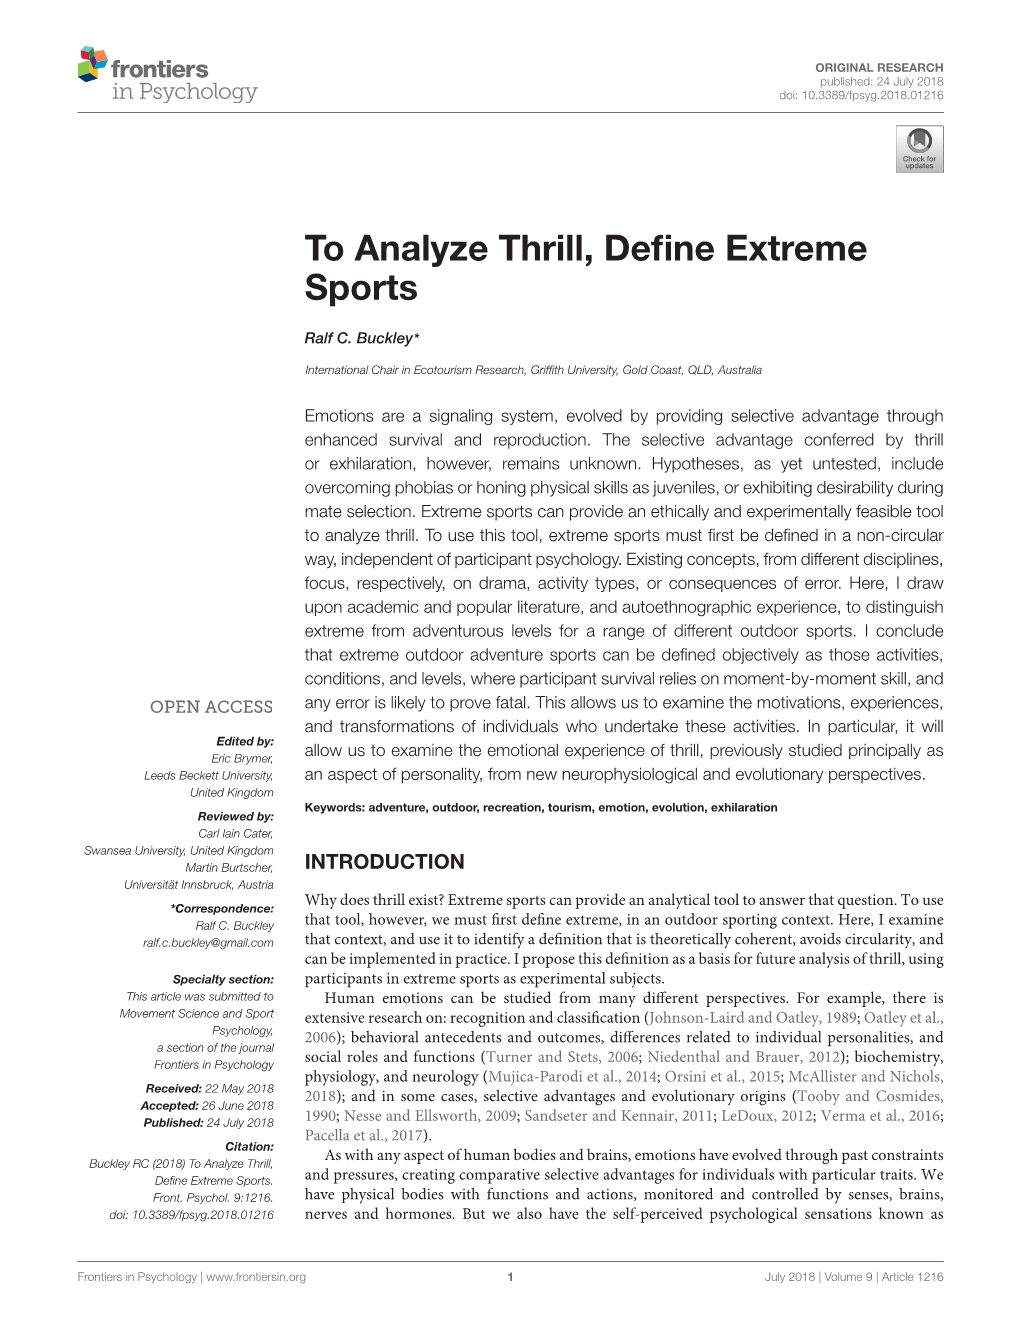 To Analyze Thrill, Define Extreme Sports